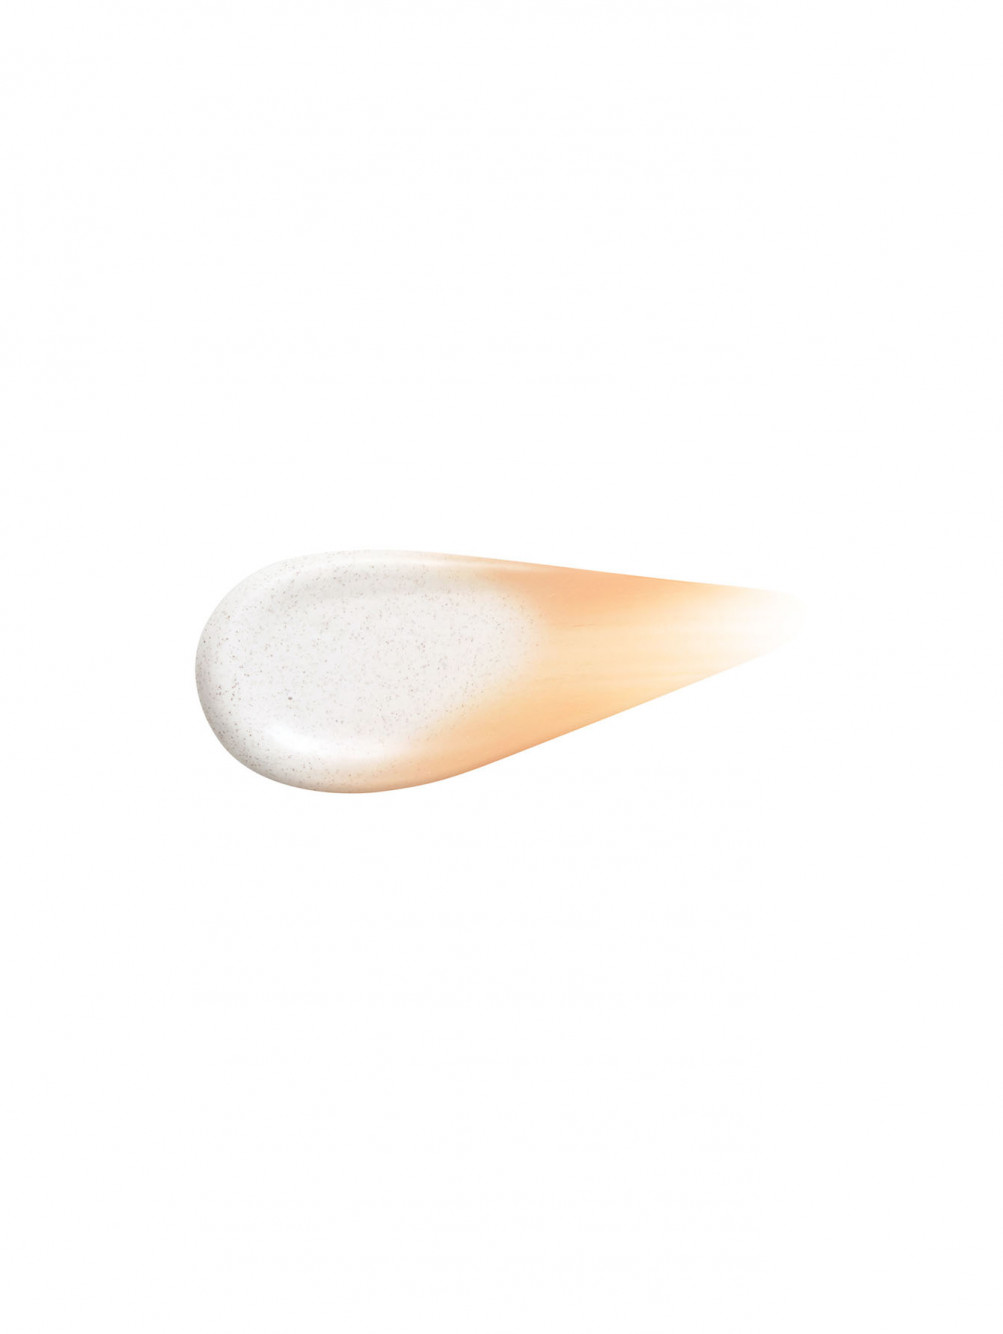 SHISEIDO WASO SHIKULIME Увлажняющий крем, выравнивающий тон кожи, без содержания масел, SPF 30, 50 мл - Обтравка2